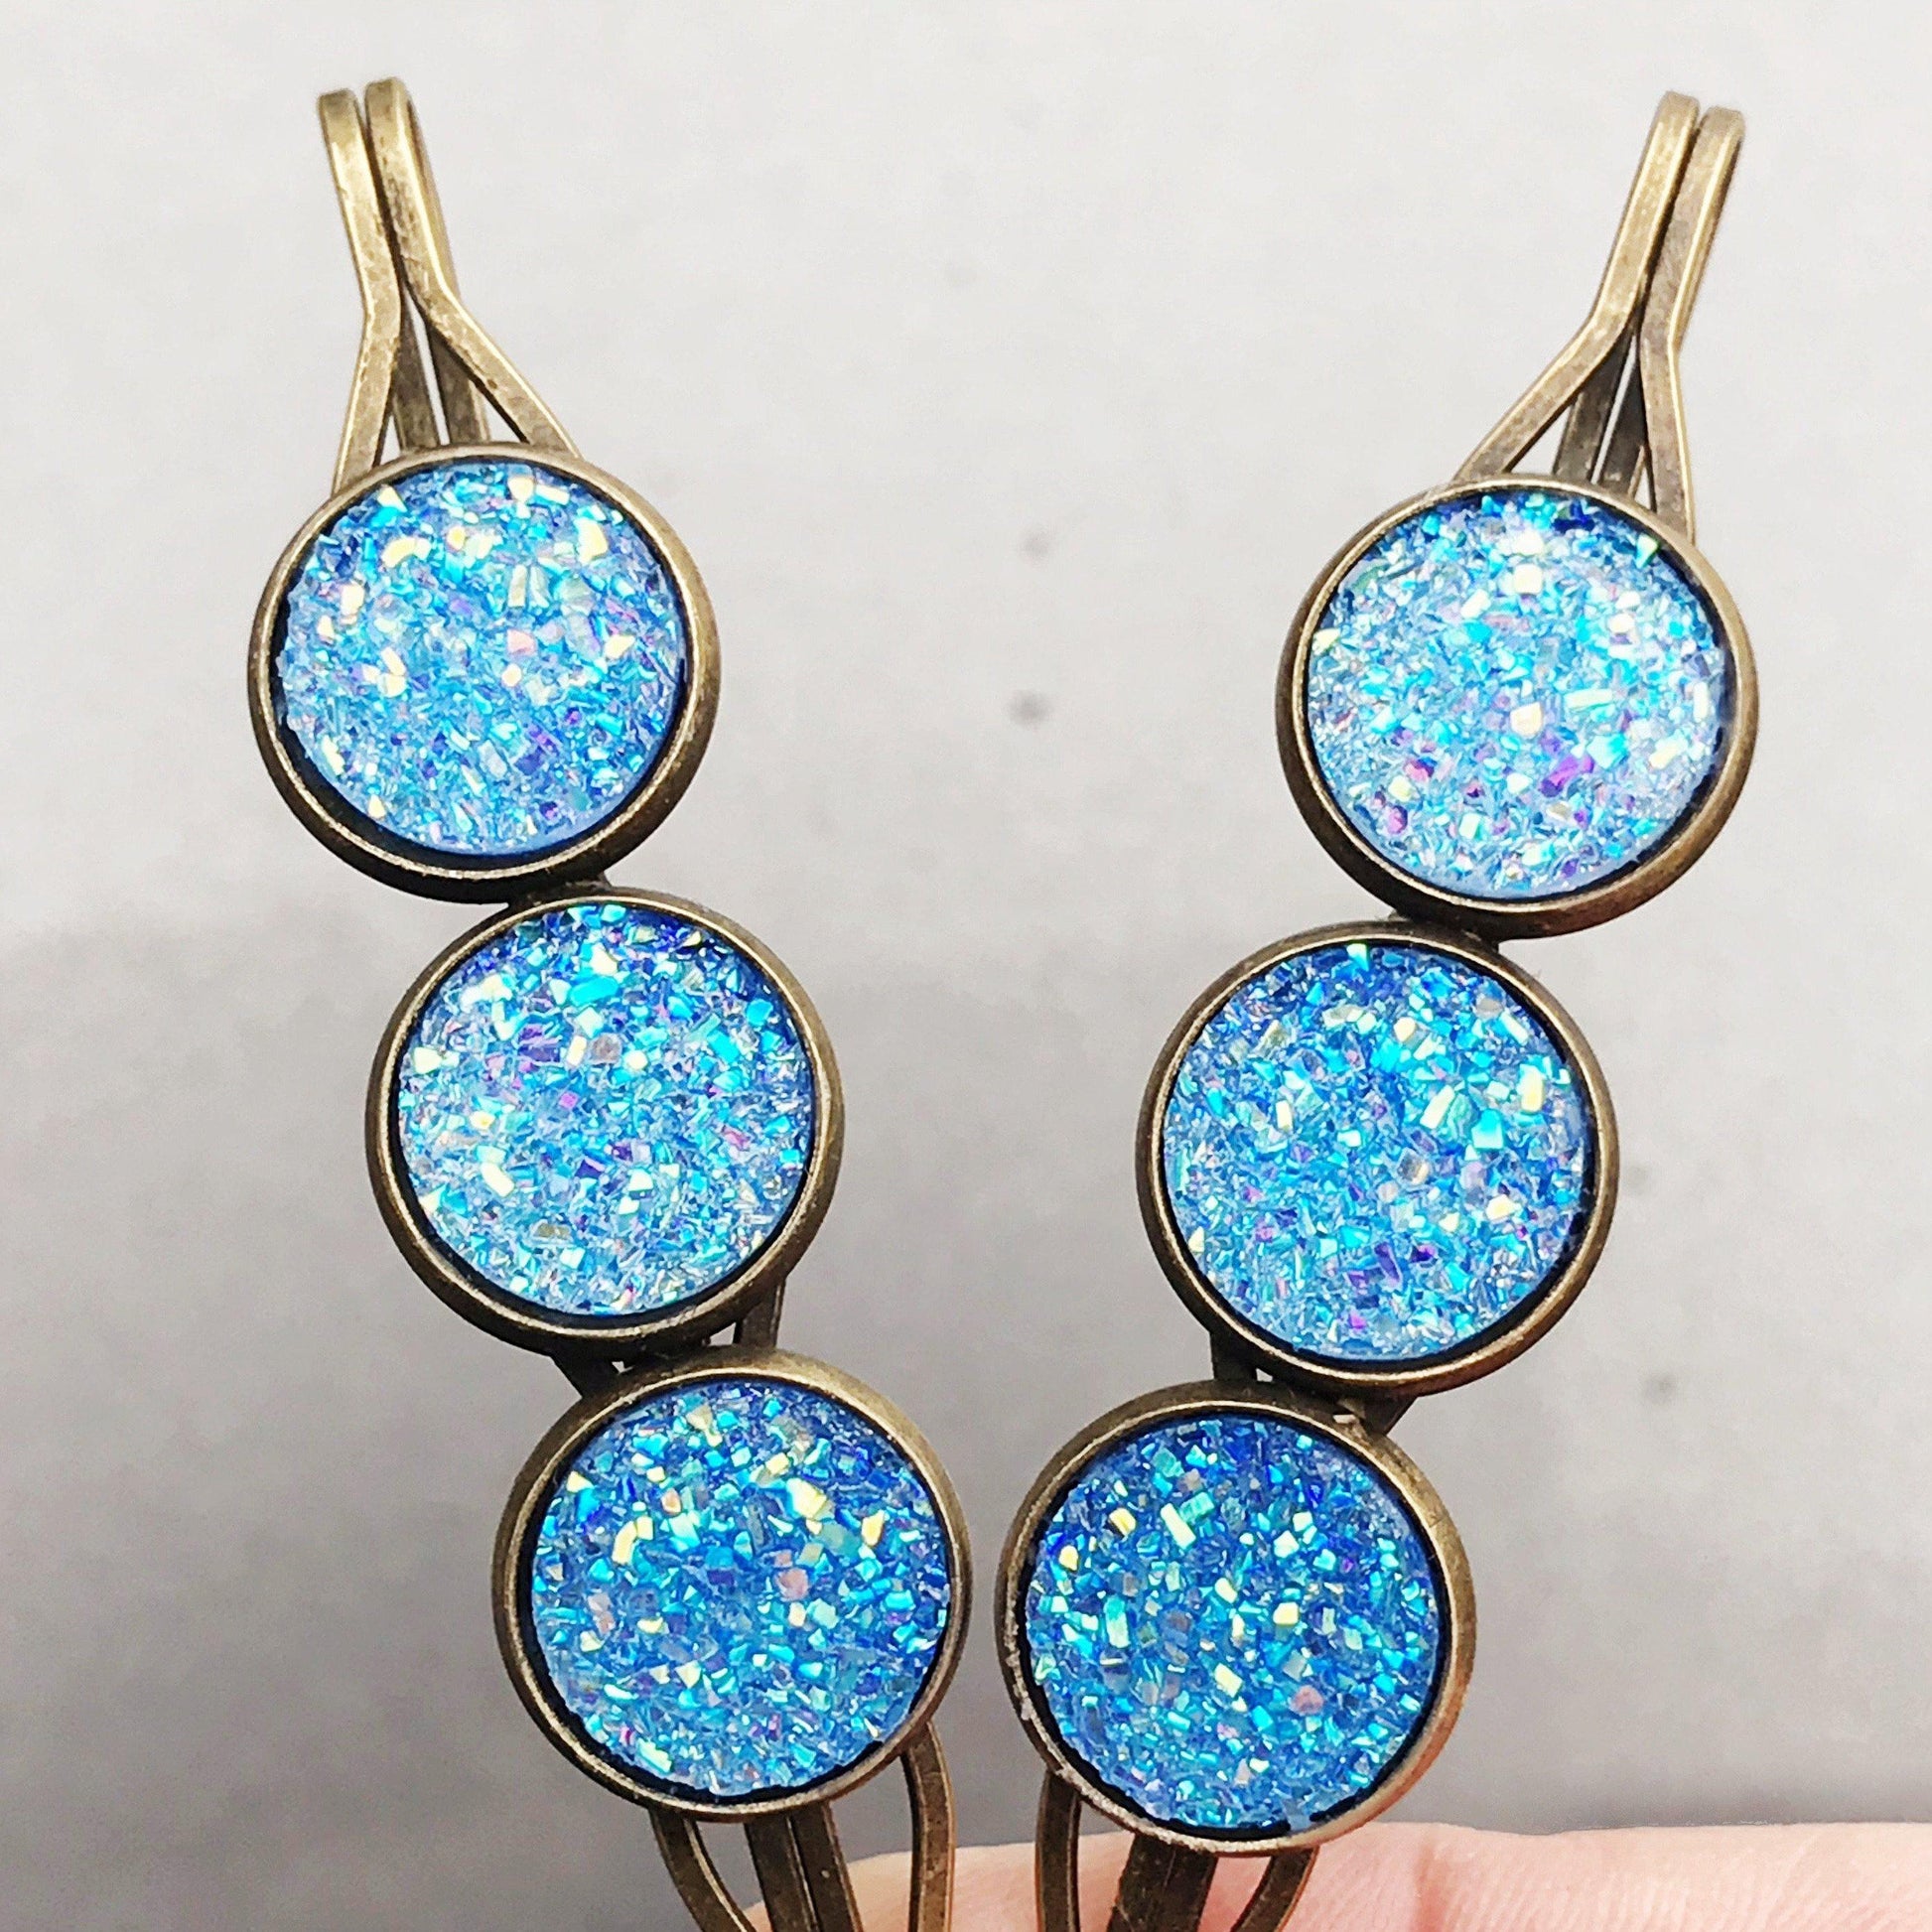 Blue Glitter Druzy Hair Pins - Sparkling & Stylish Hair Accessories